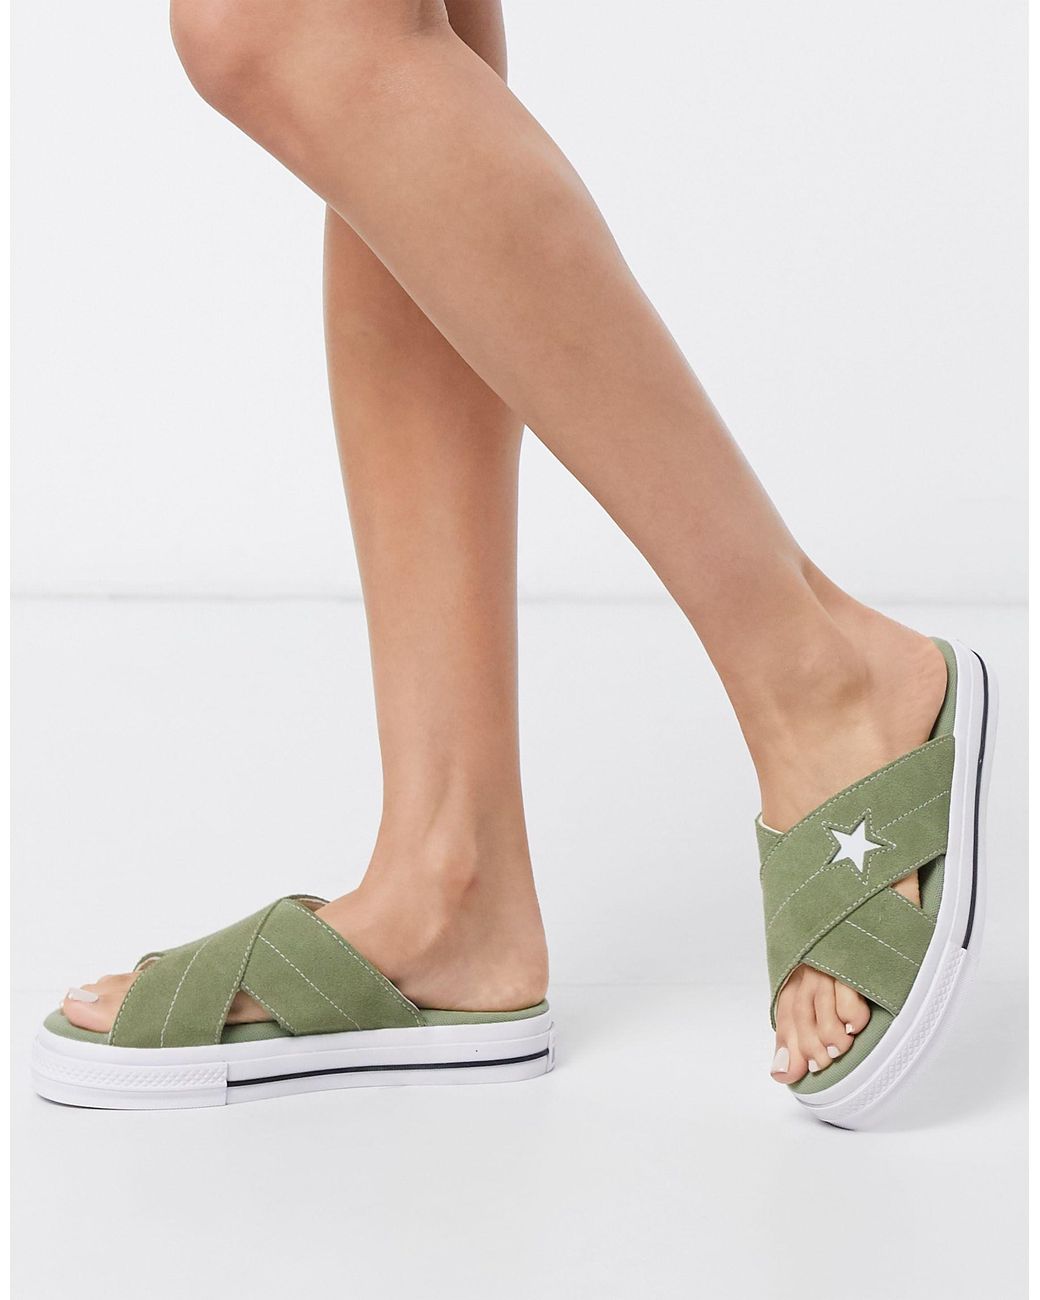 Converse One Star Khaki Green Sandals | Lyst Canada